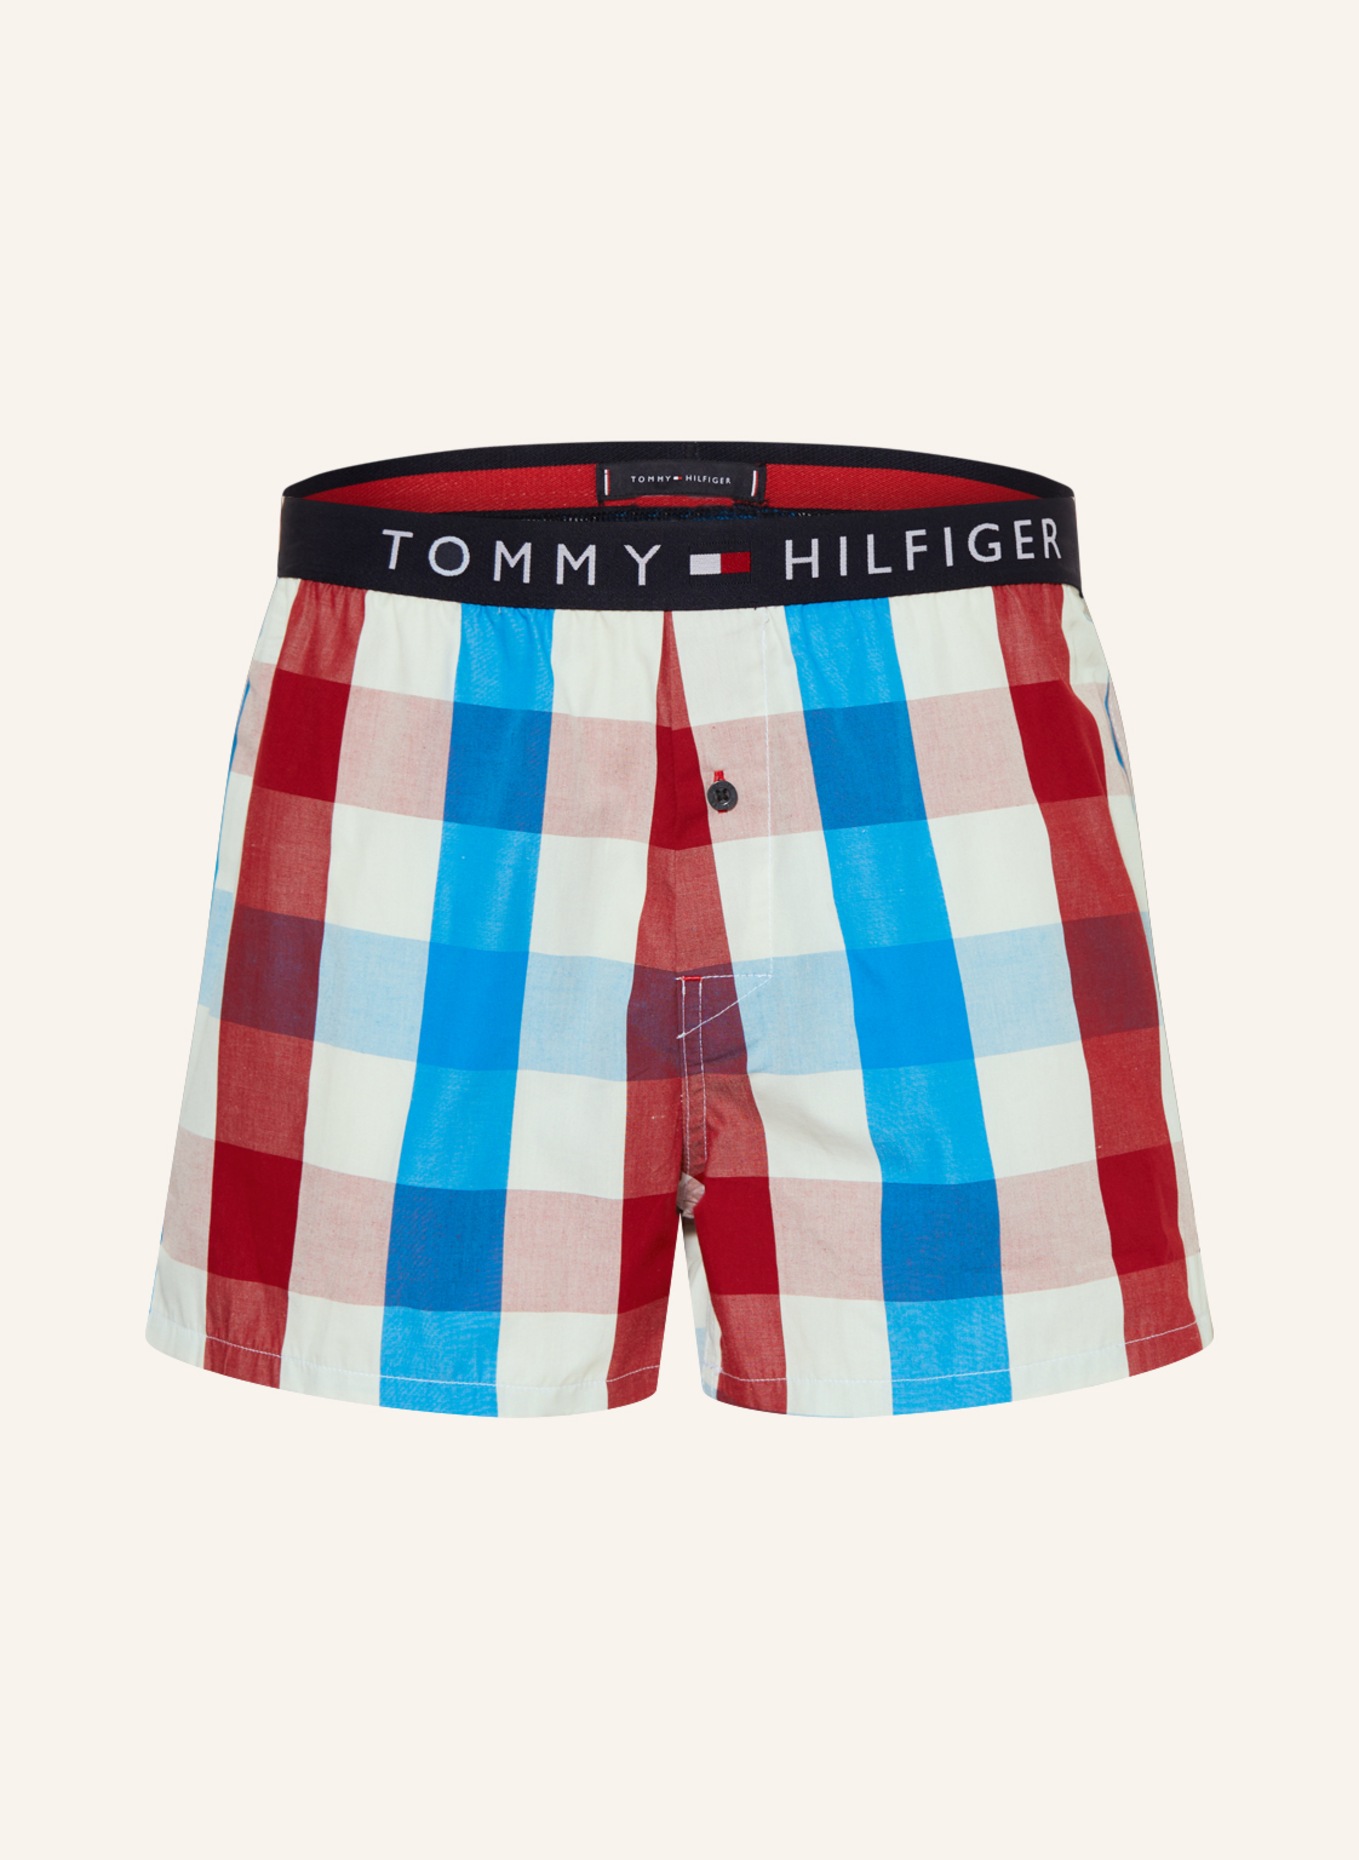 TOMMY HILFIGER Web-Boxershorts, Farbe: DUNKELROT/ BLAU/ WEISS (Bild 1)